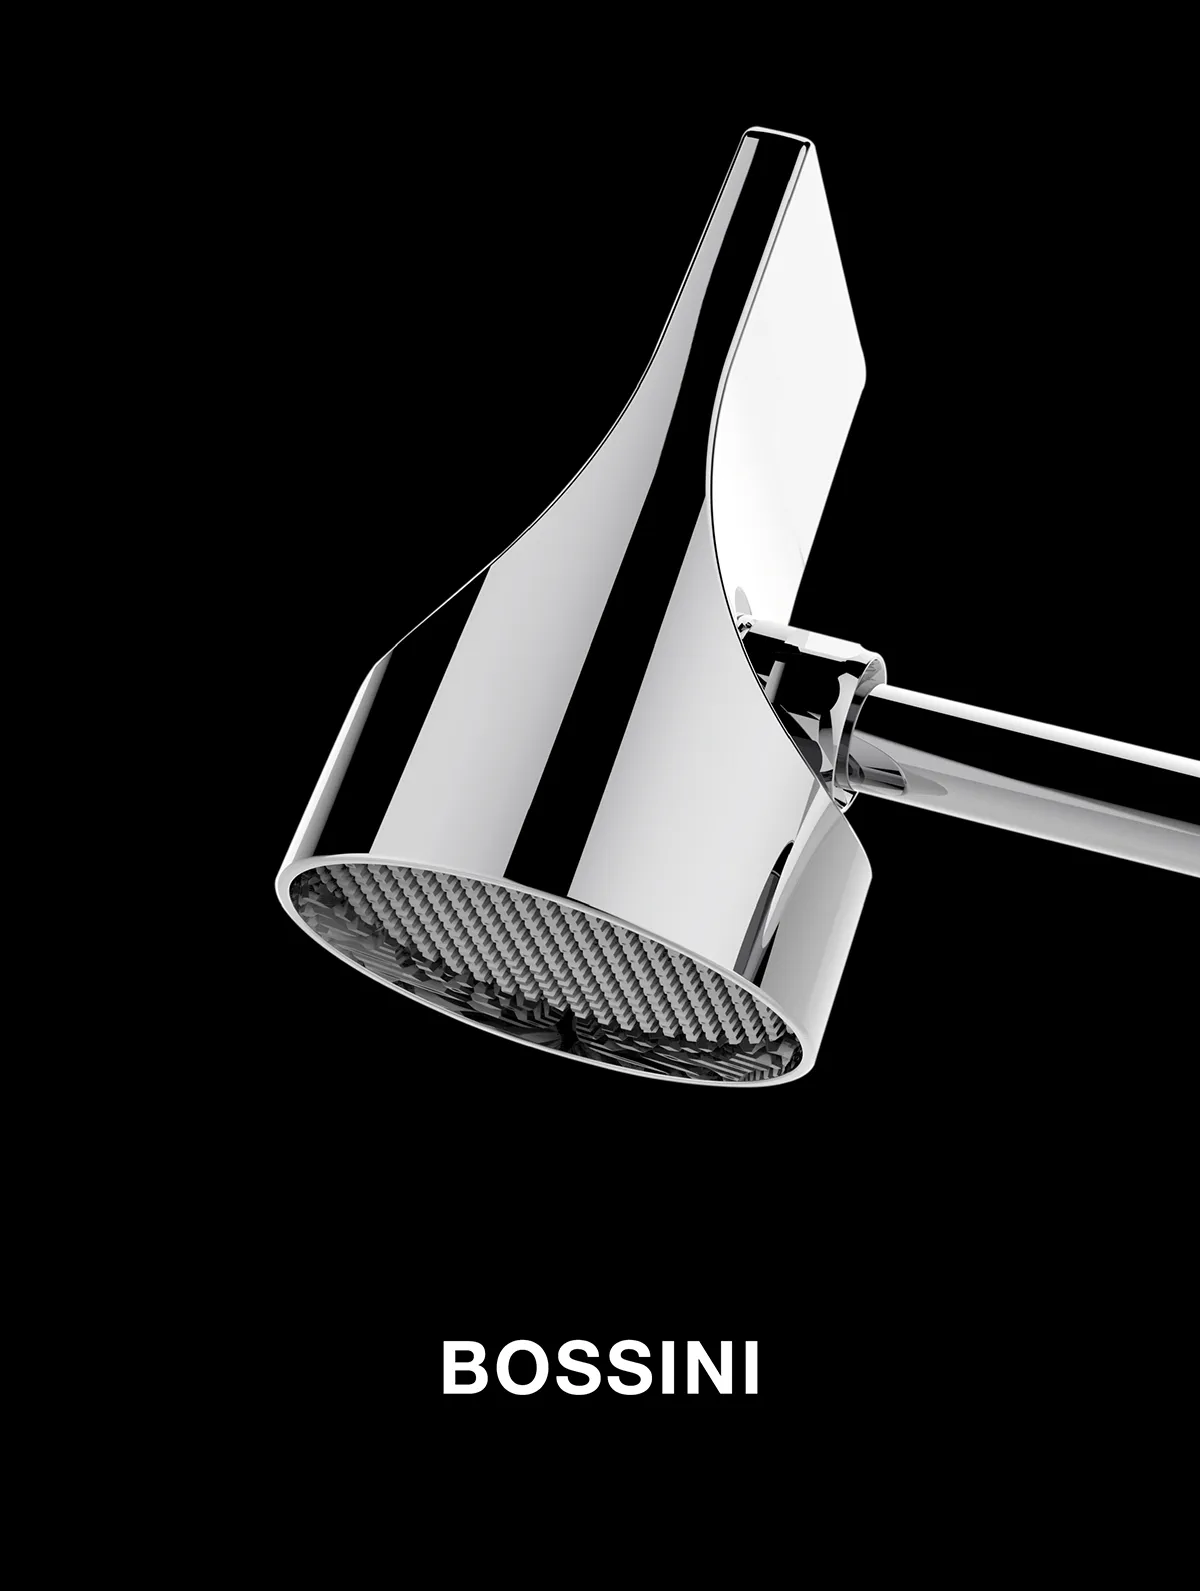 Hangar Design Group - Bossini